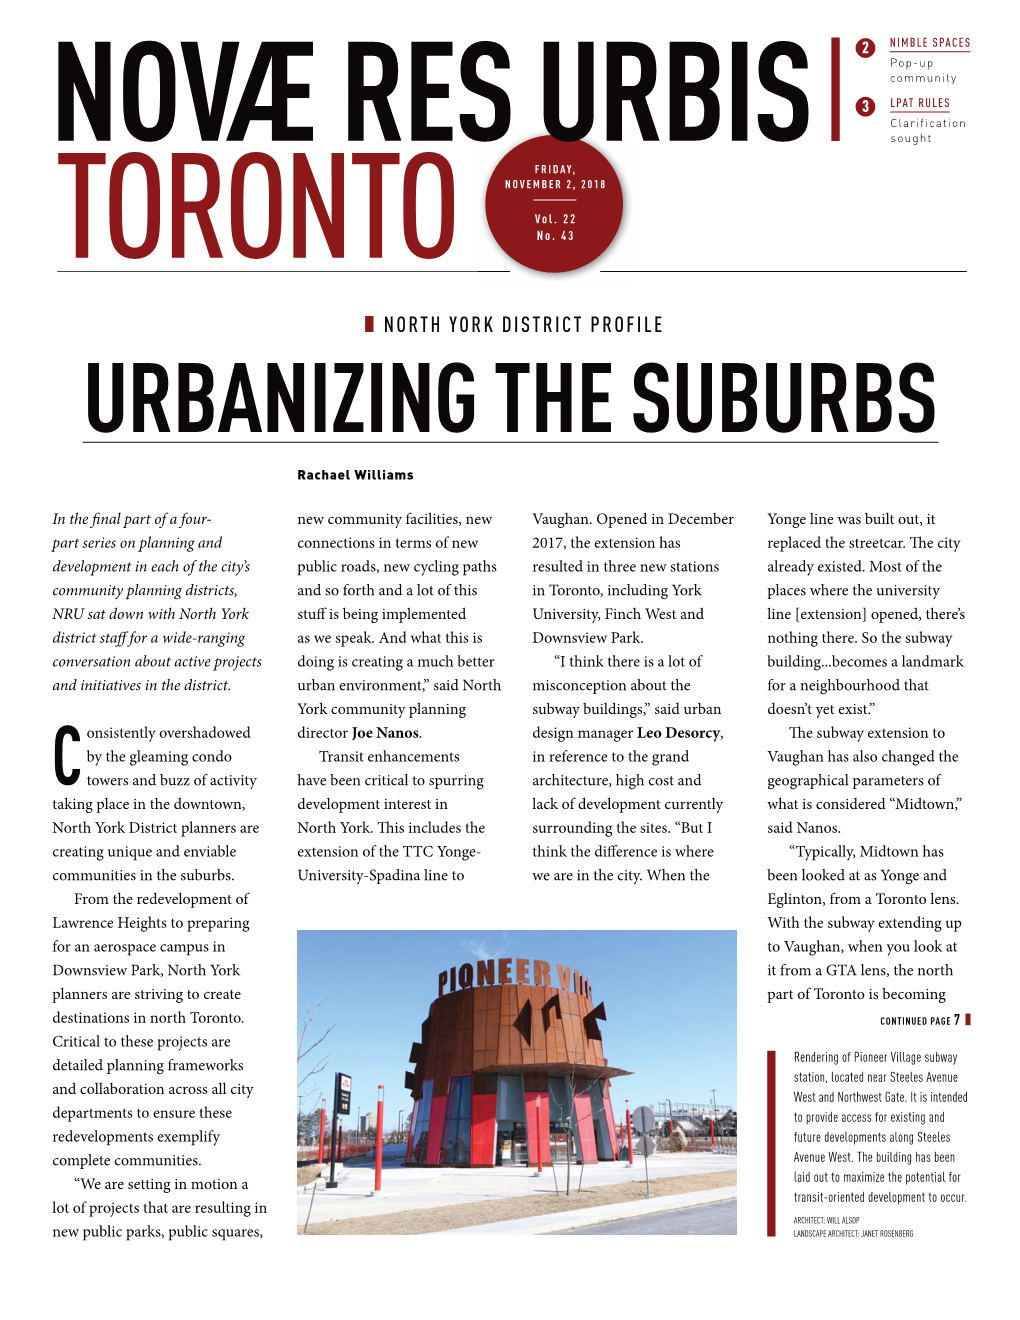 Urbanizing the Suburbs